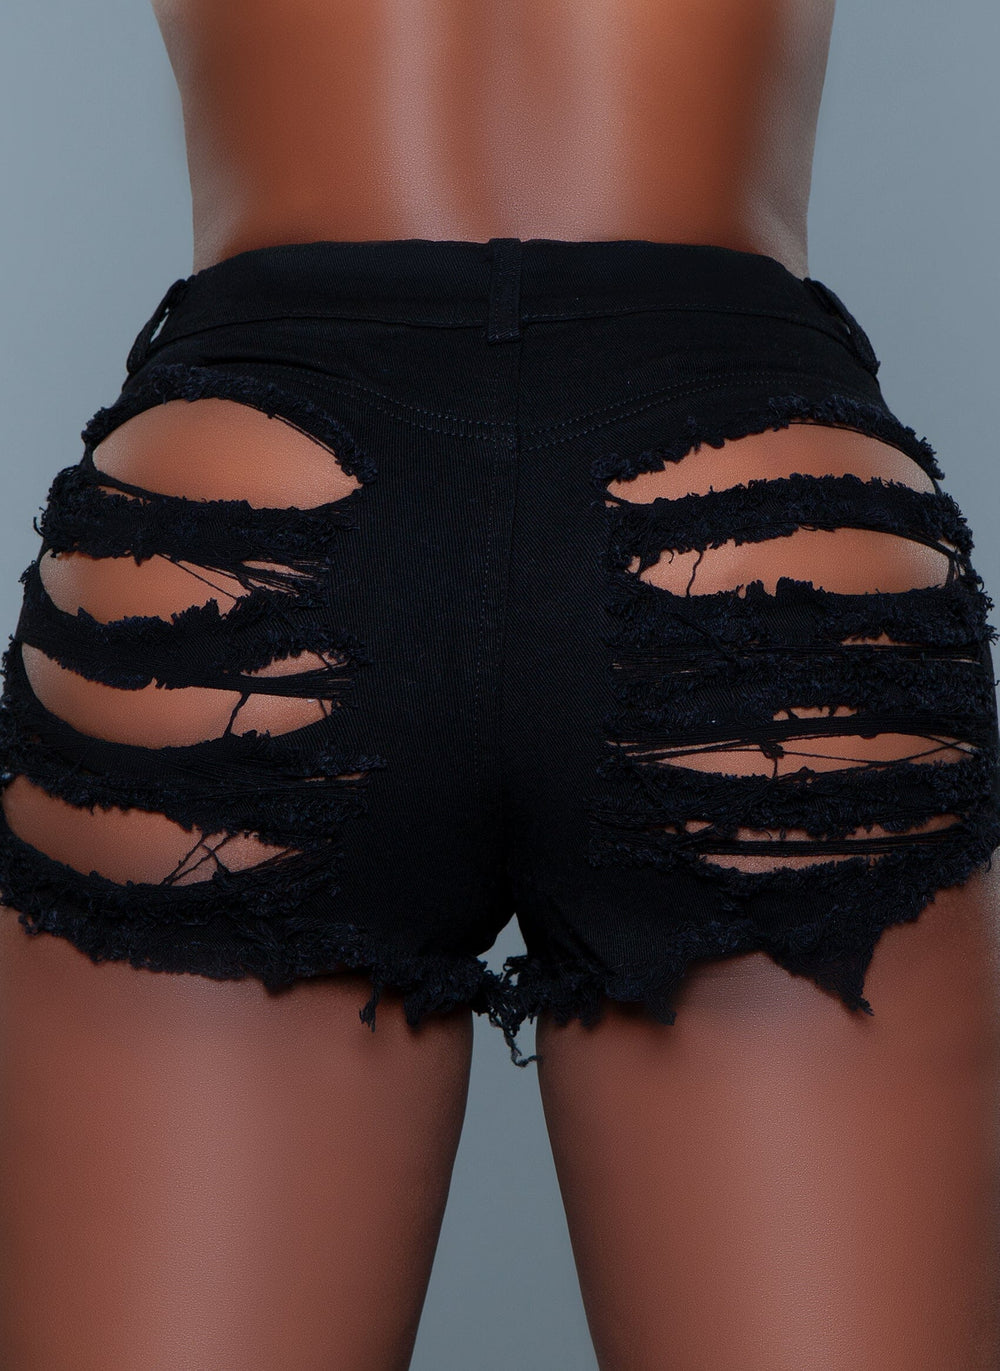 Medium Rise Denim Shorts With Zipper Closure-Denim Shorts-BeWicked-SEXYSHOES.COM